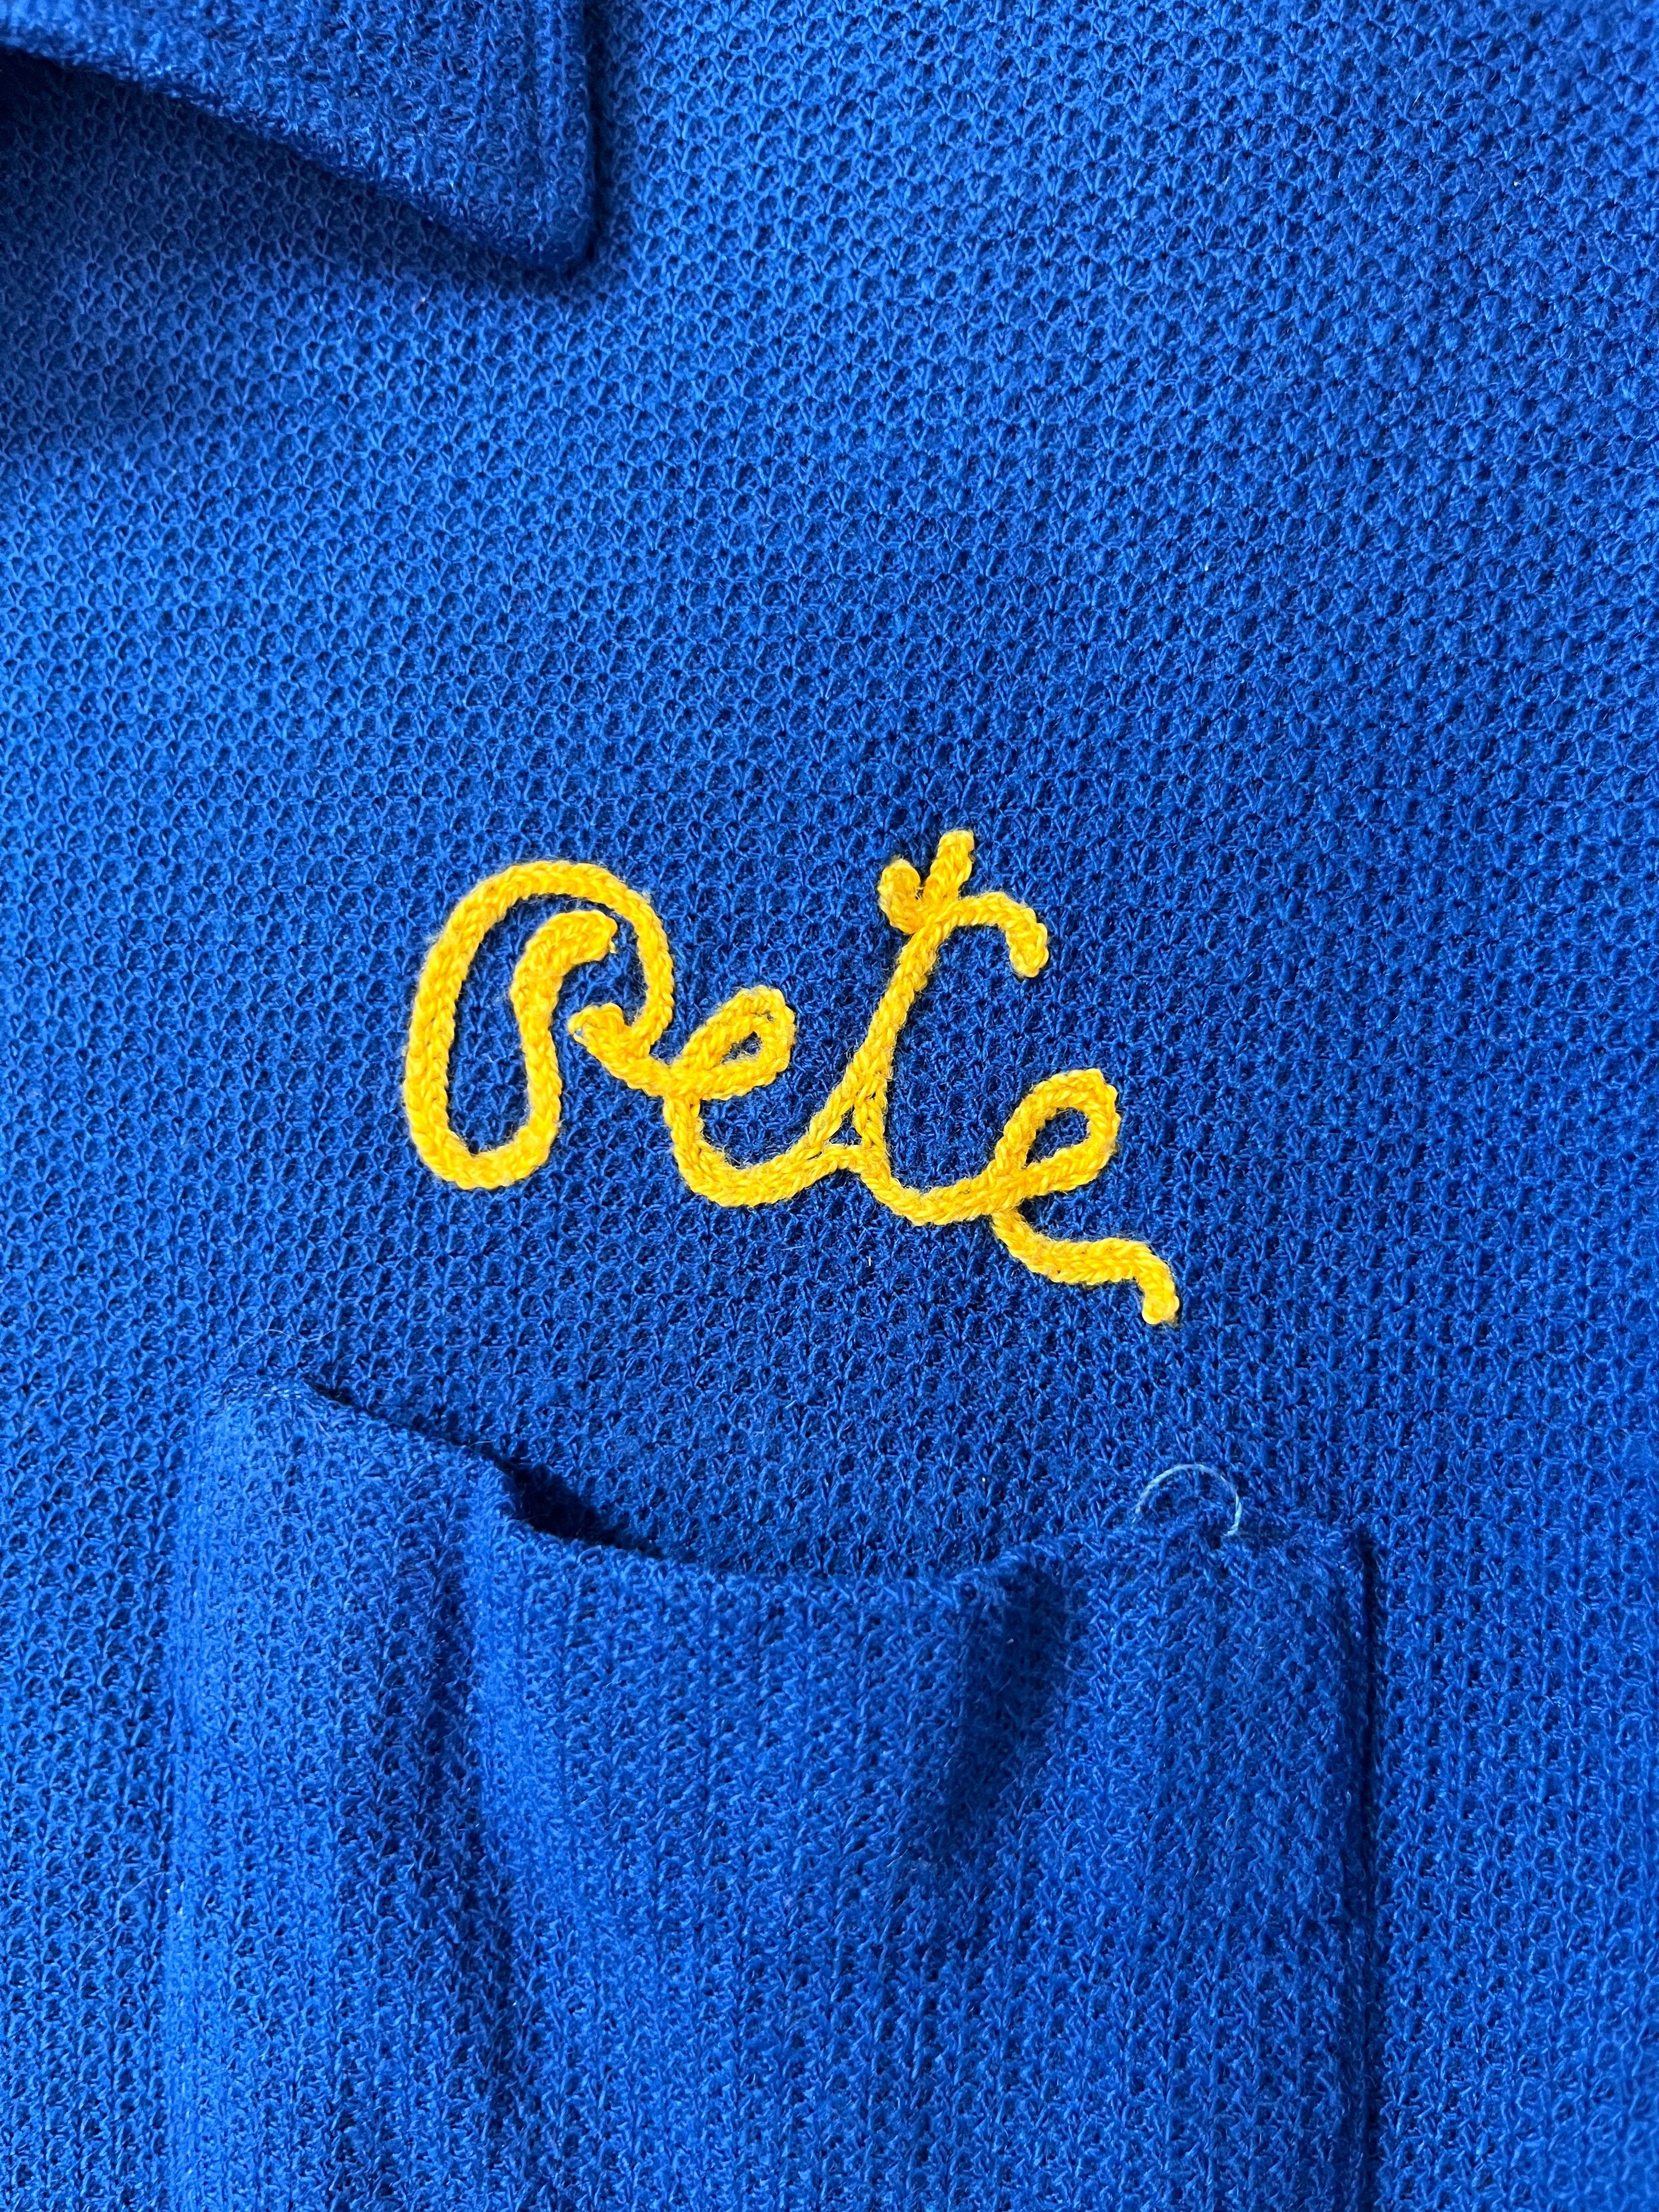 1970s Bowling Polo Shirt ‘Noon’s, Bennington VT’ - Blue/Yellow - XL